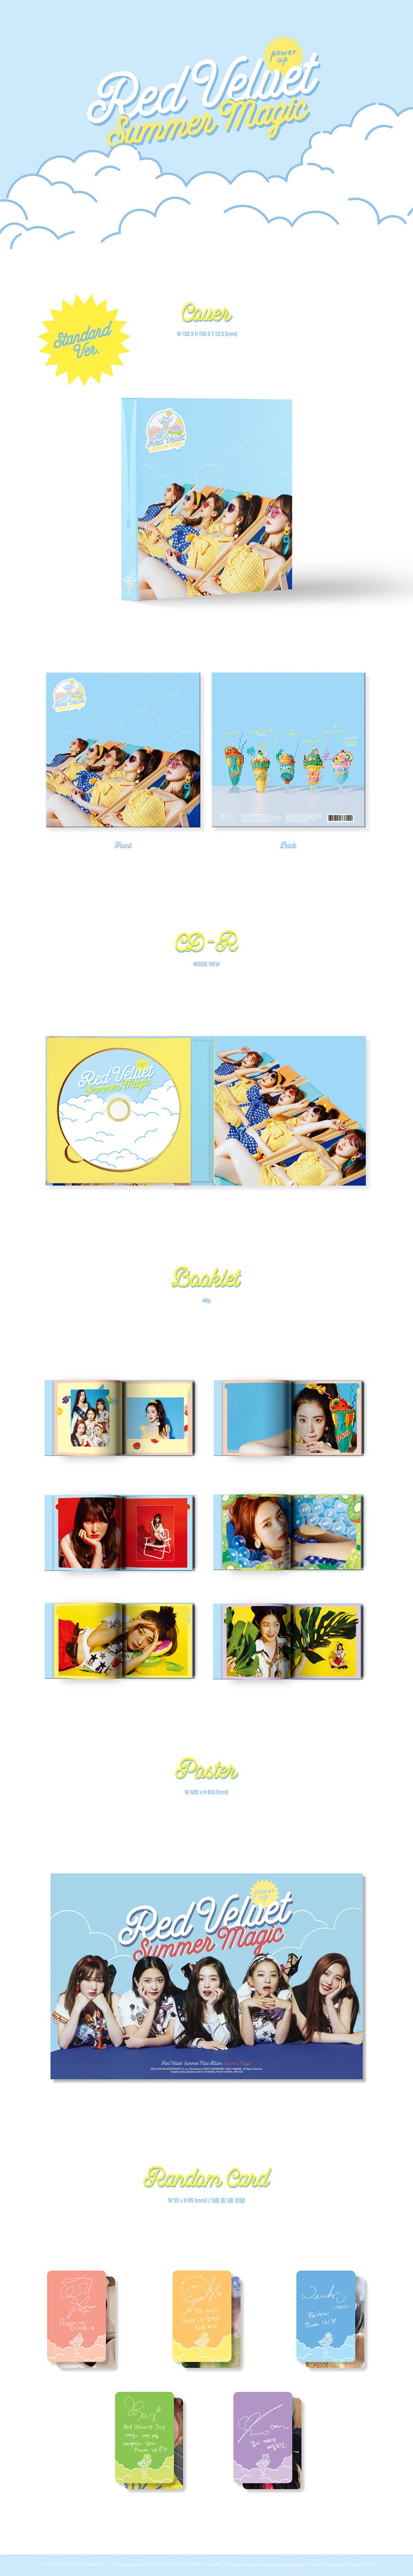 Red Velvet - Summer Magic [Summer Mini Album]